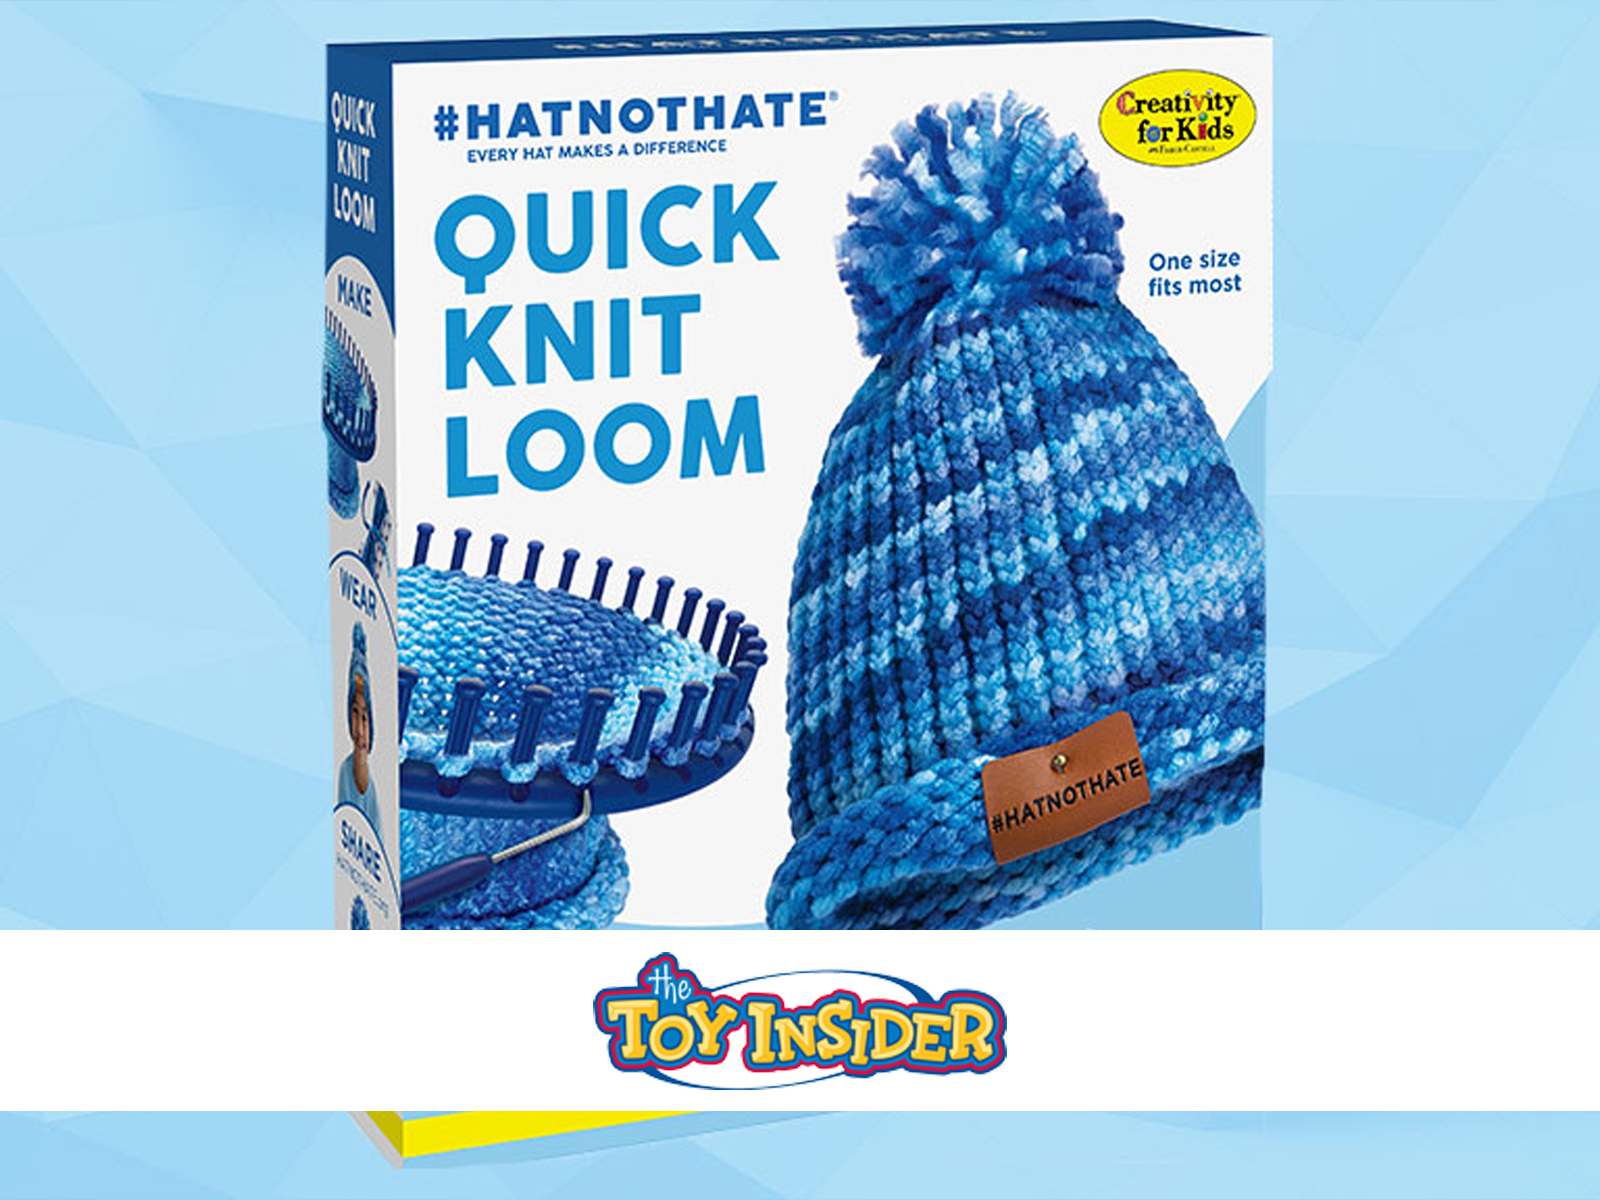 Toy Insider logo overlaid on image of Quick Knit Loom kit